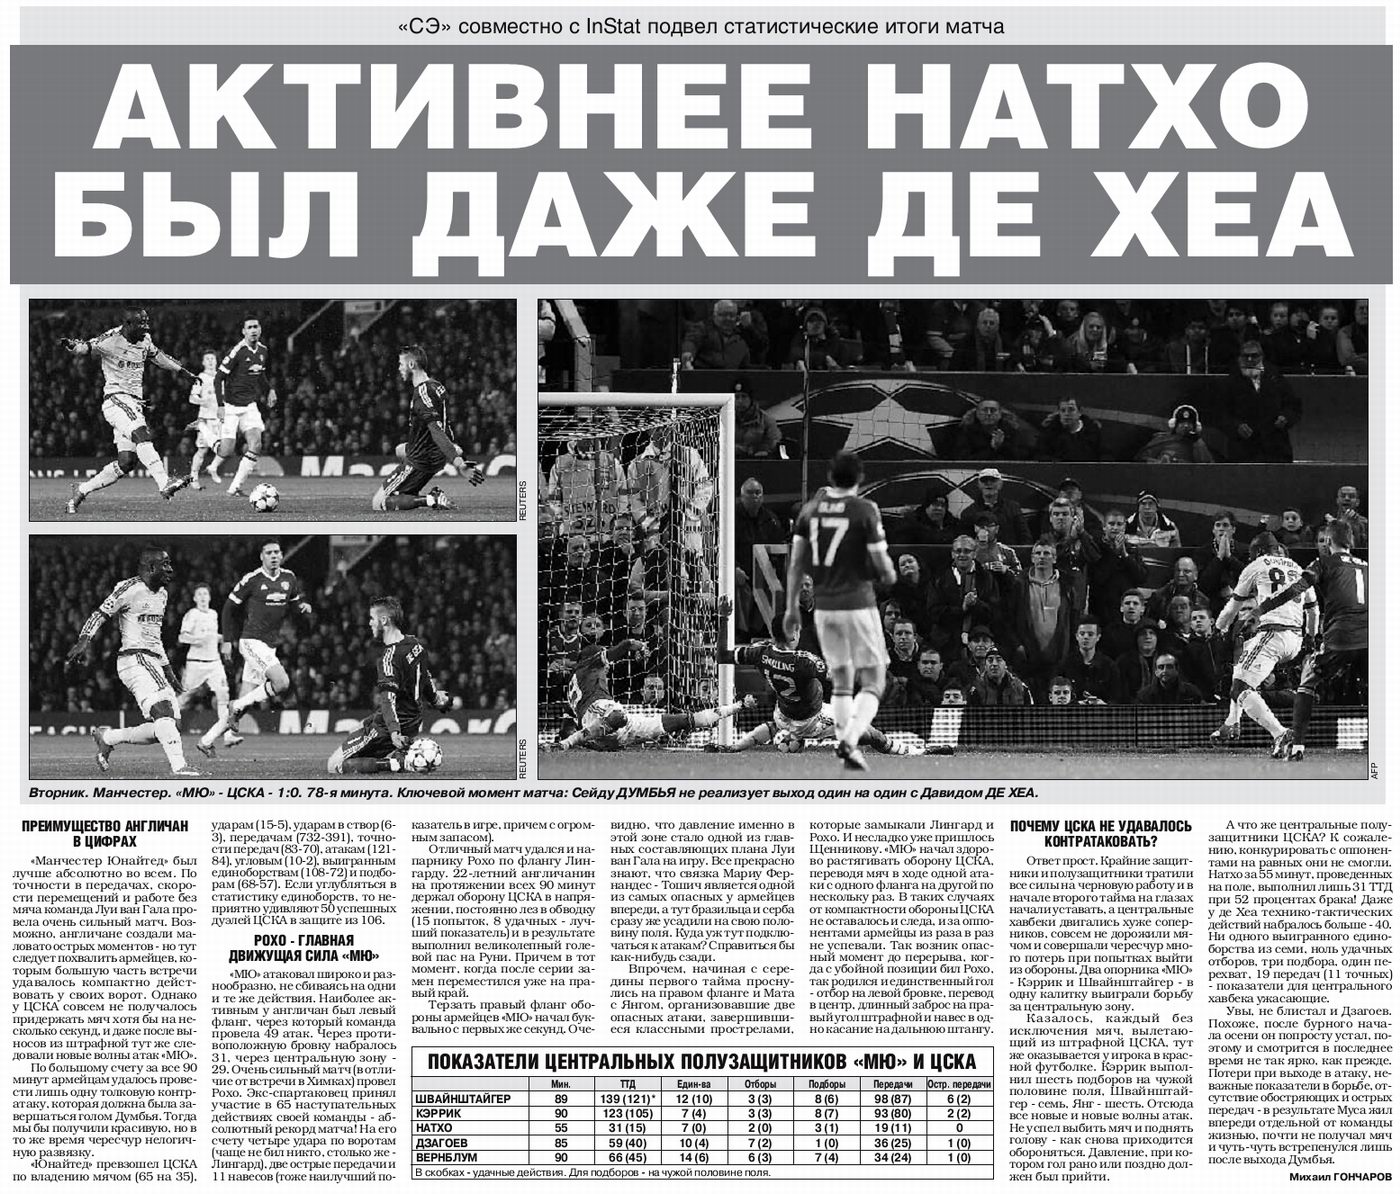 2015-11-03.ManchesterUnited-CSKA.2